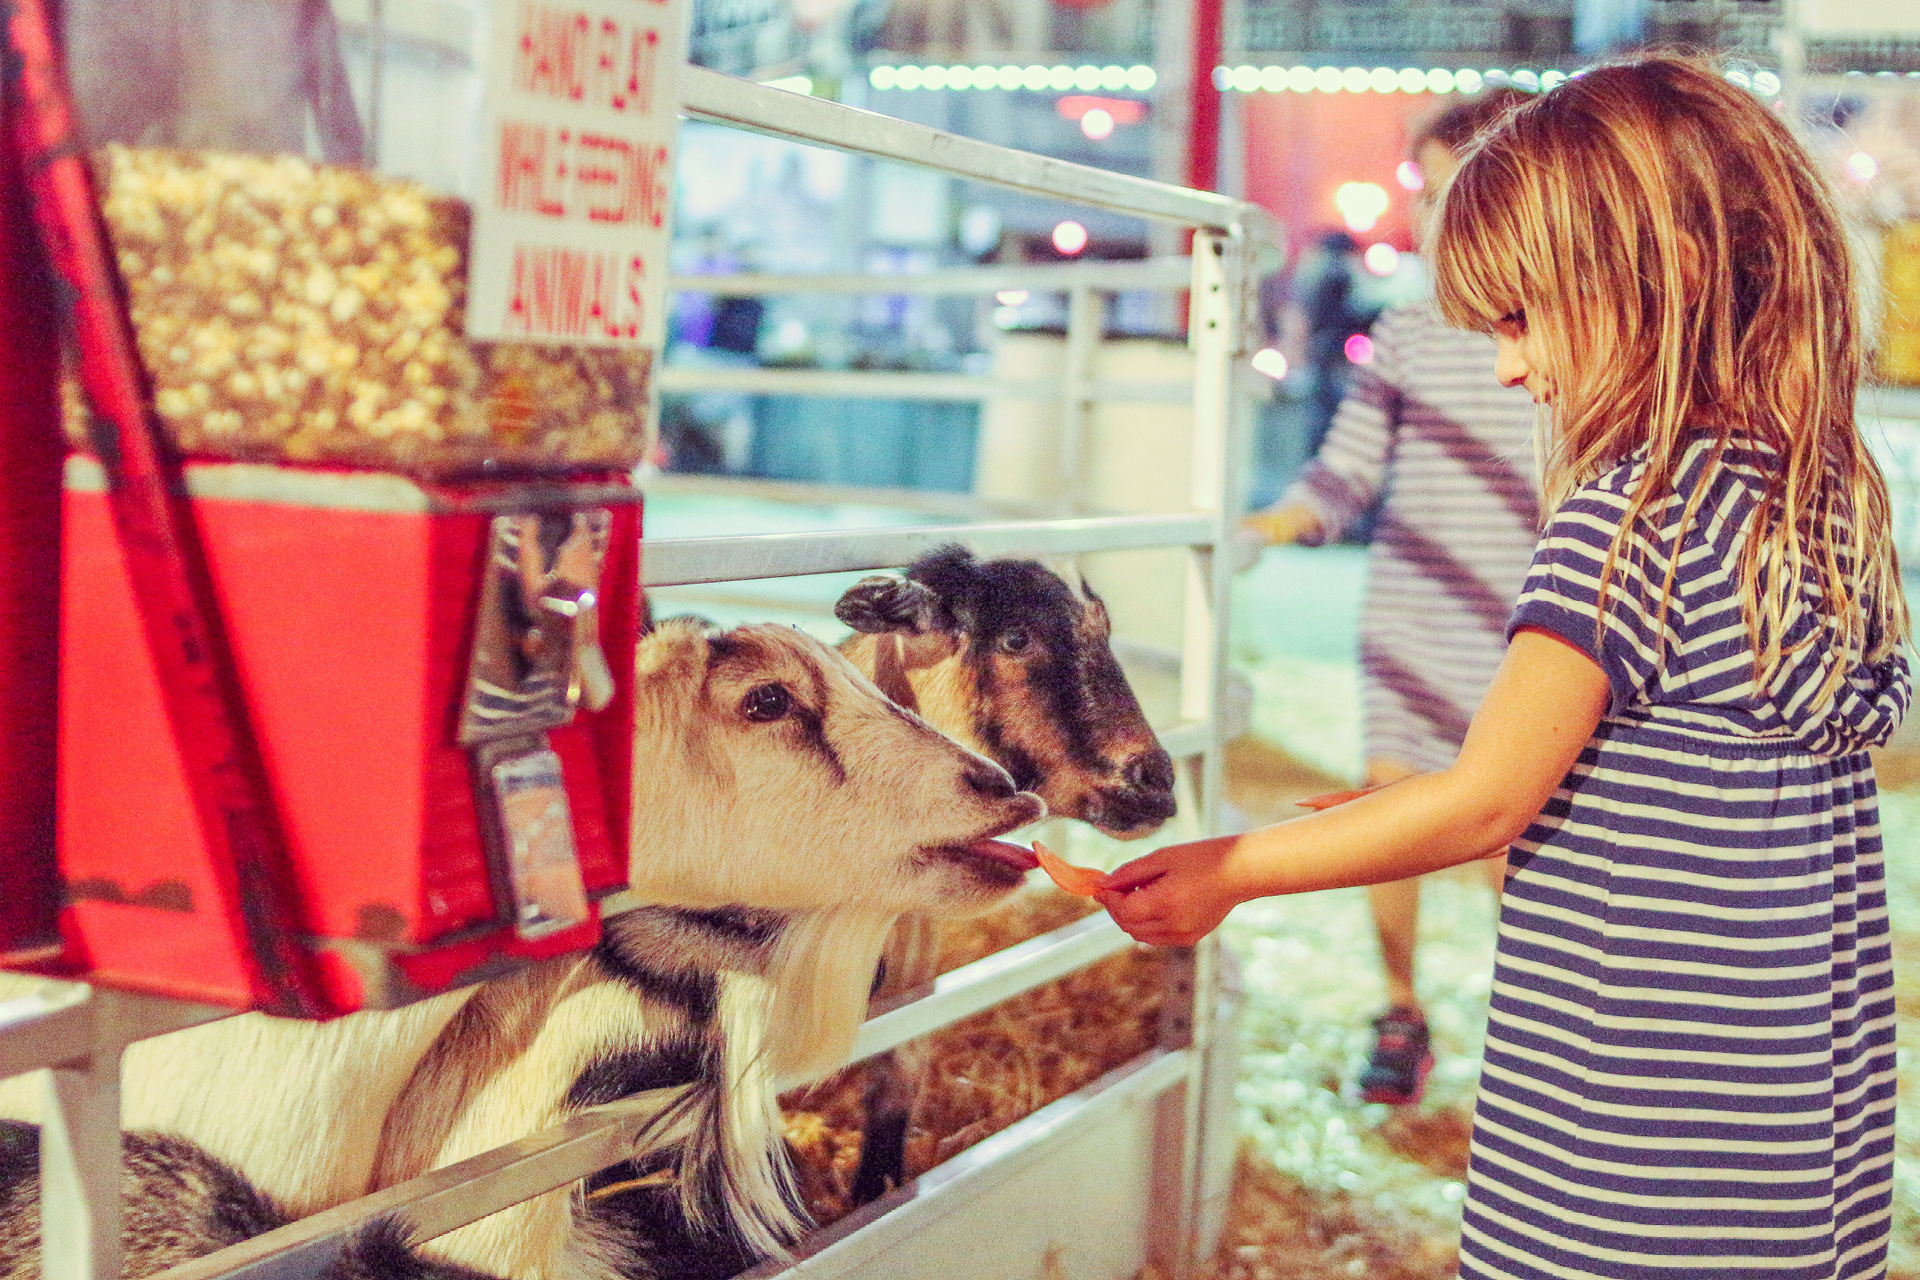 Young girl feeding 2 goats.